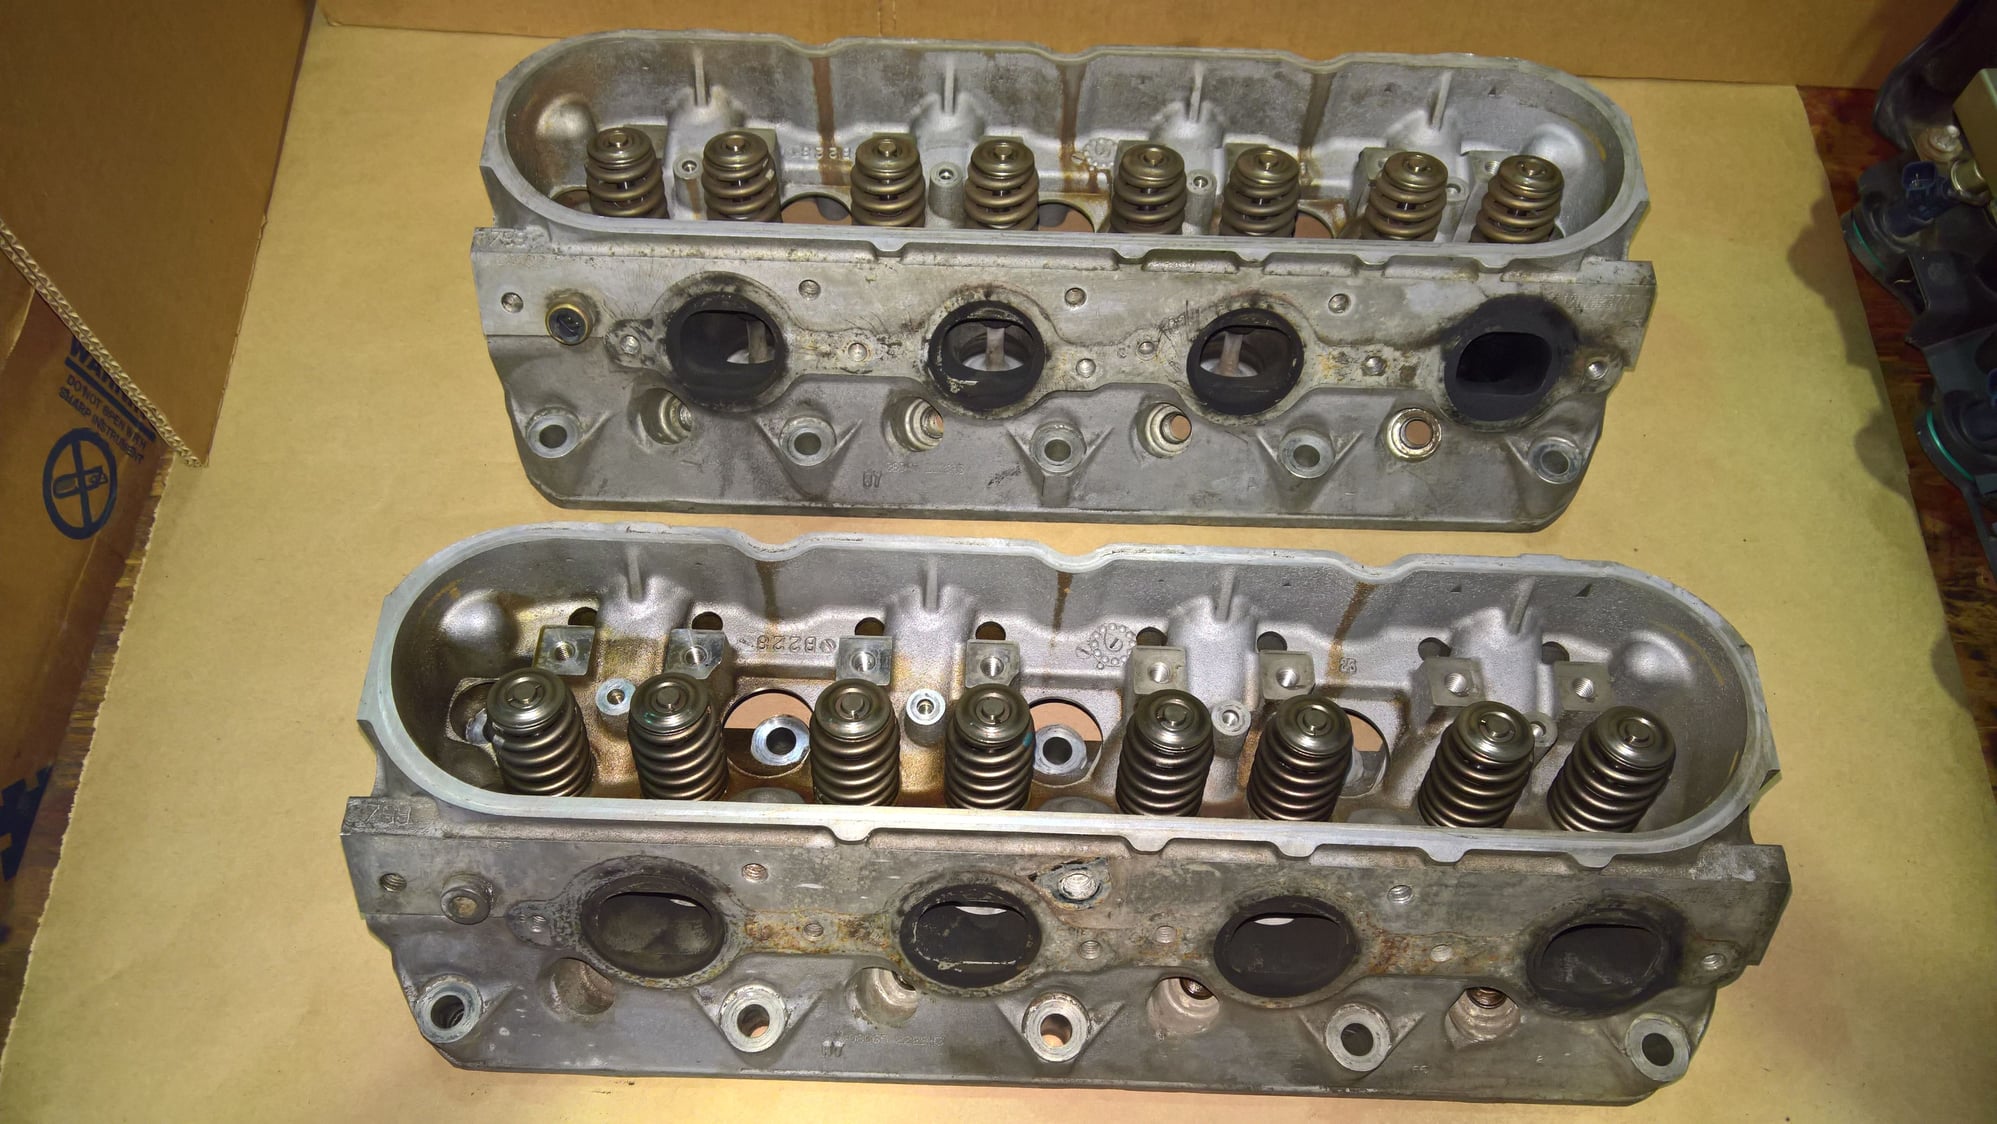 Engine - Internals - 799 heads / 5.3l pistons / rockers / intake - Used - Westland, MI 48185, United States